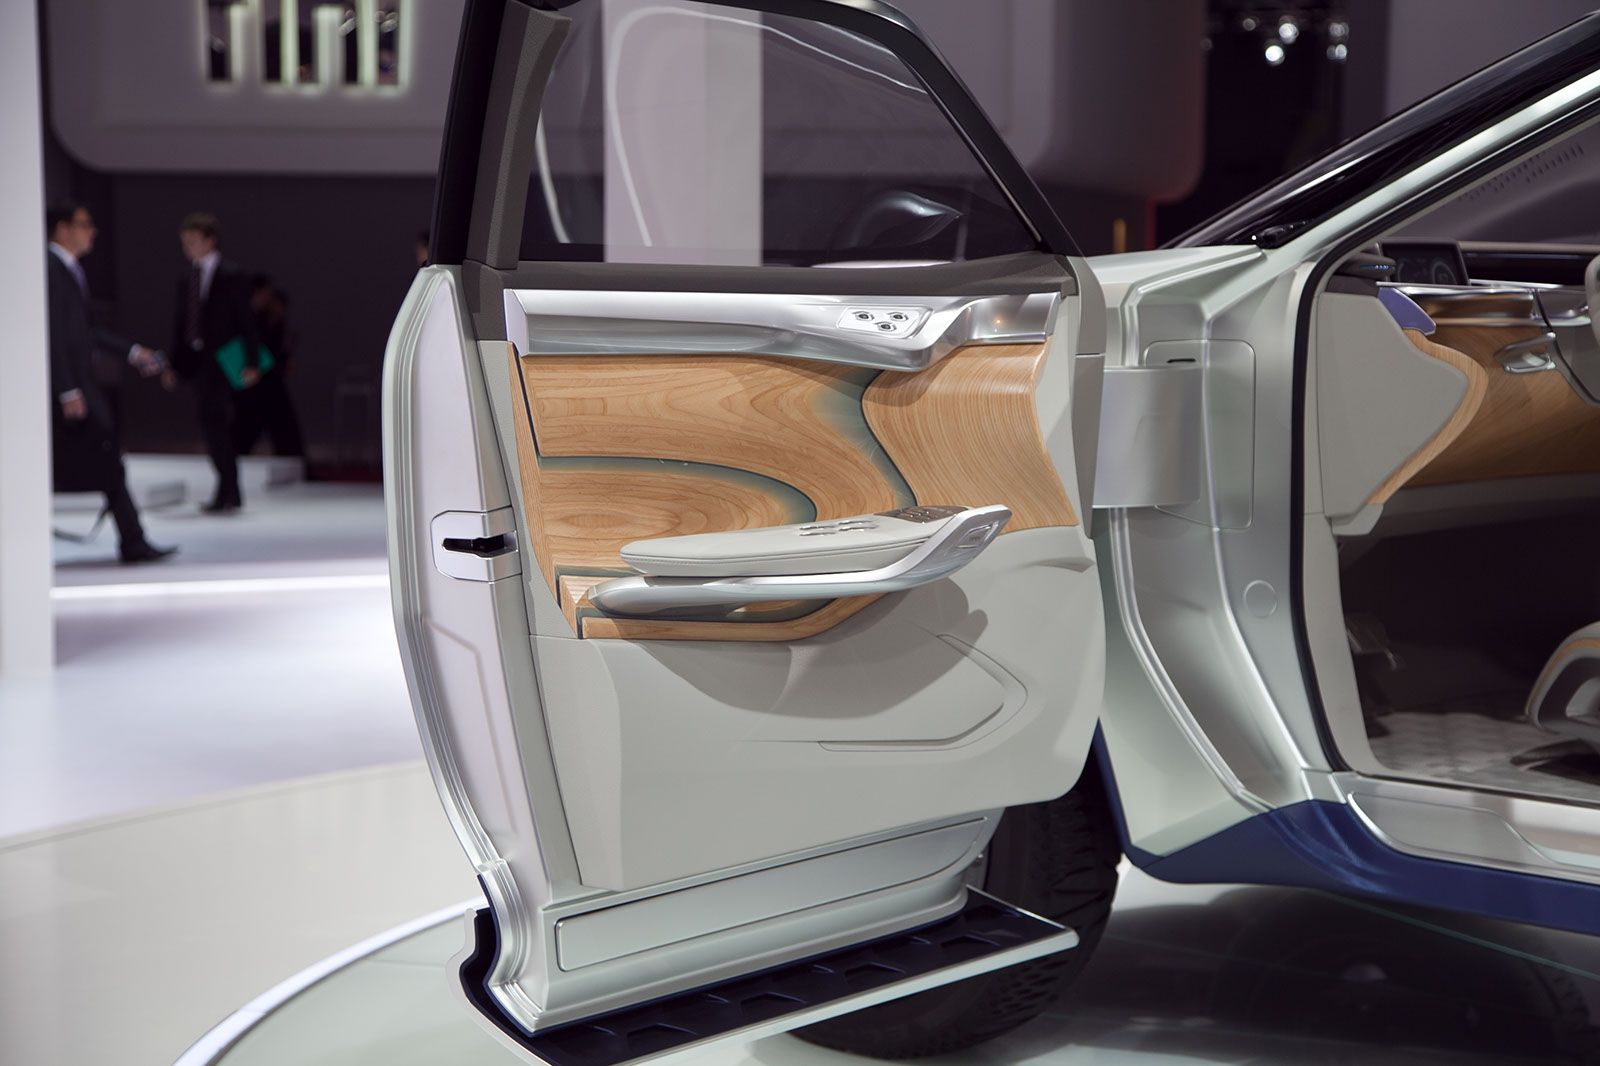 2013 Nissan Terra SUV Concept